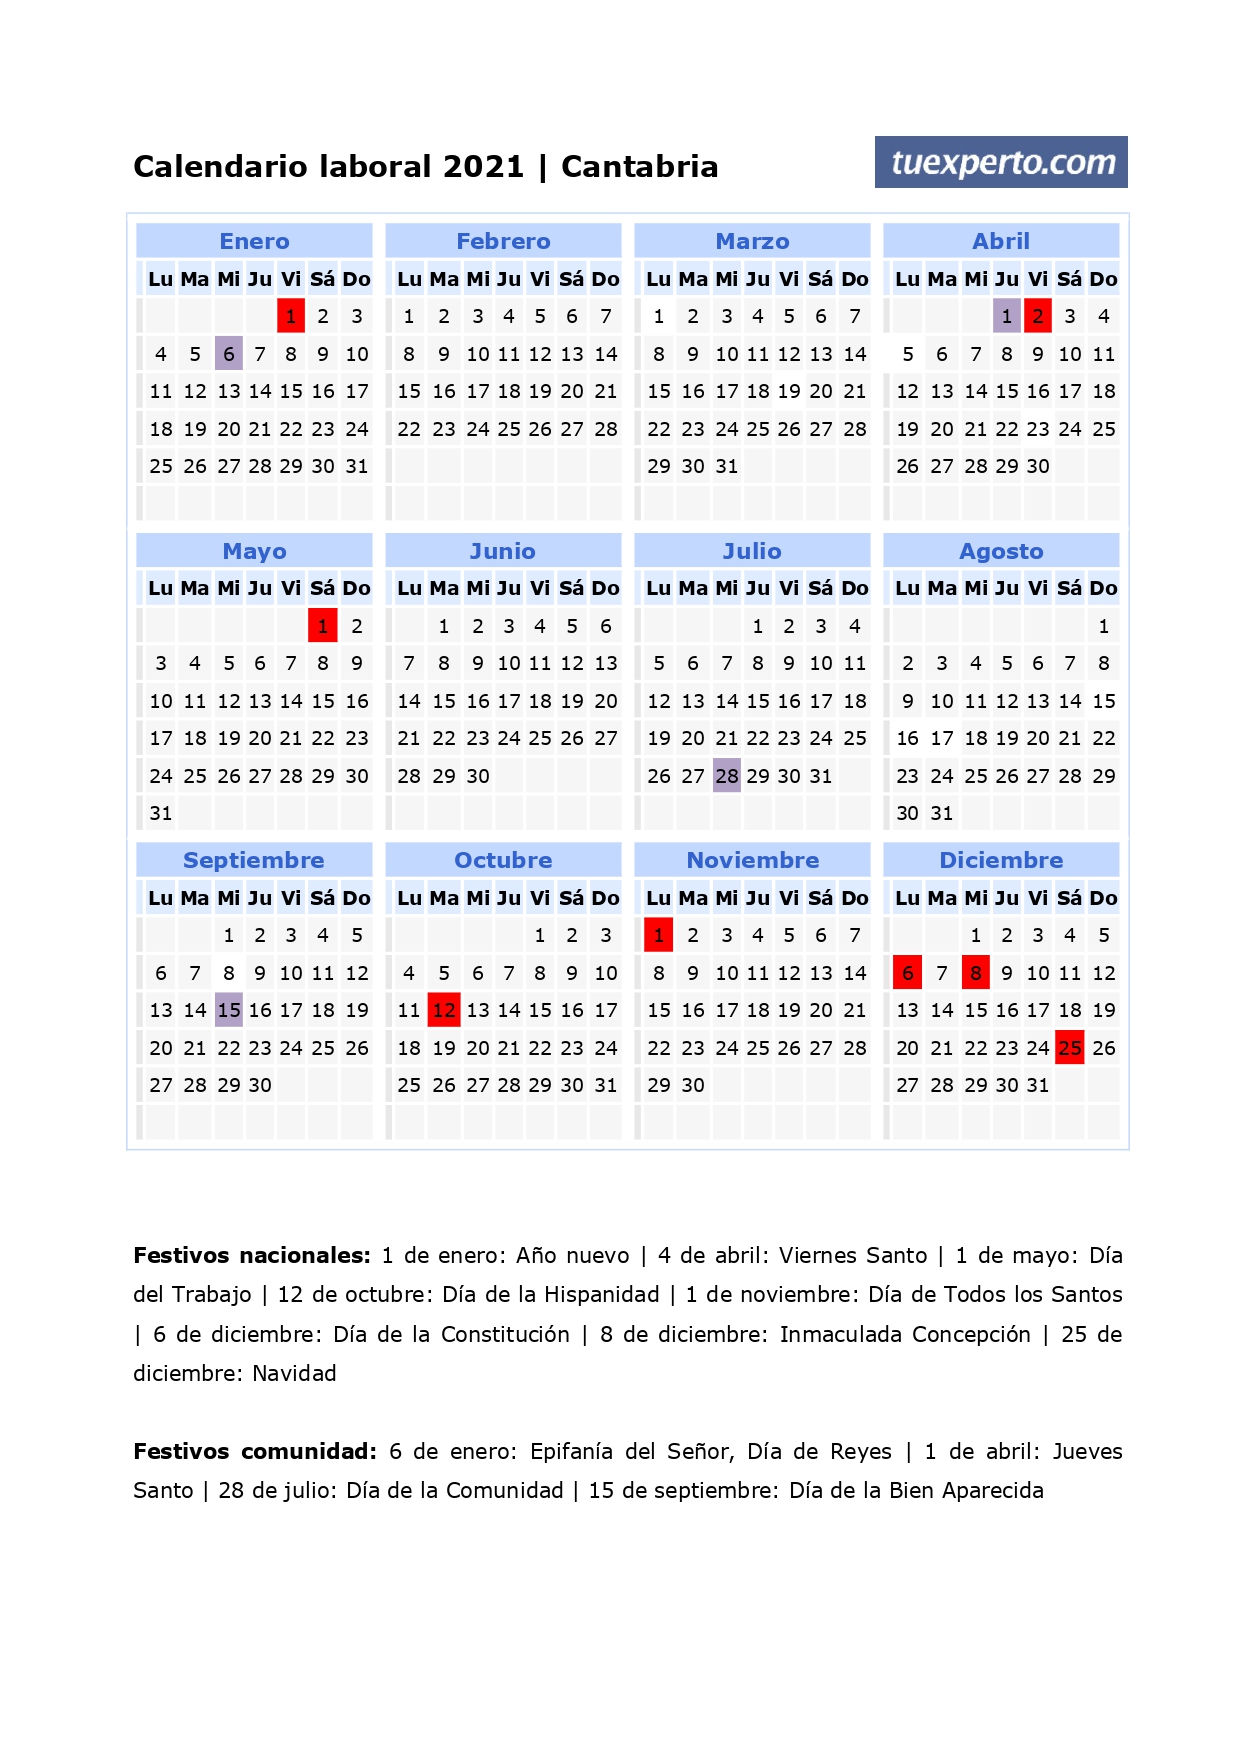 Calendario laboral 2021, calendarios con festivos por comunidad para imprimir 2